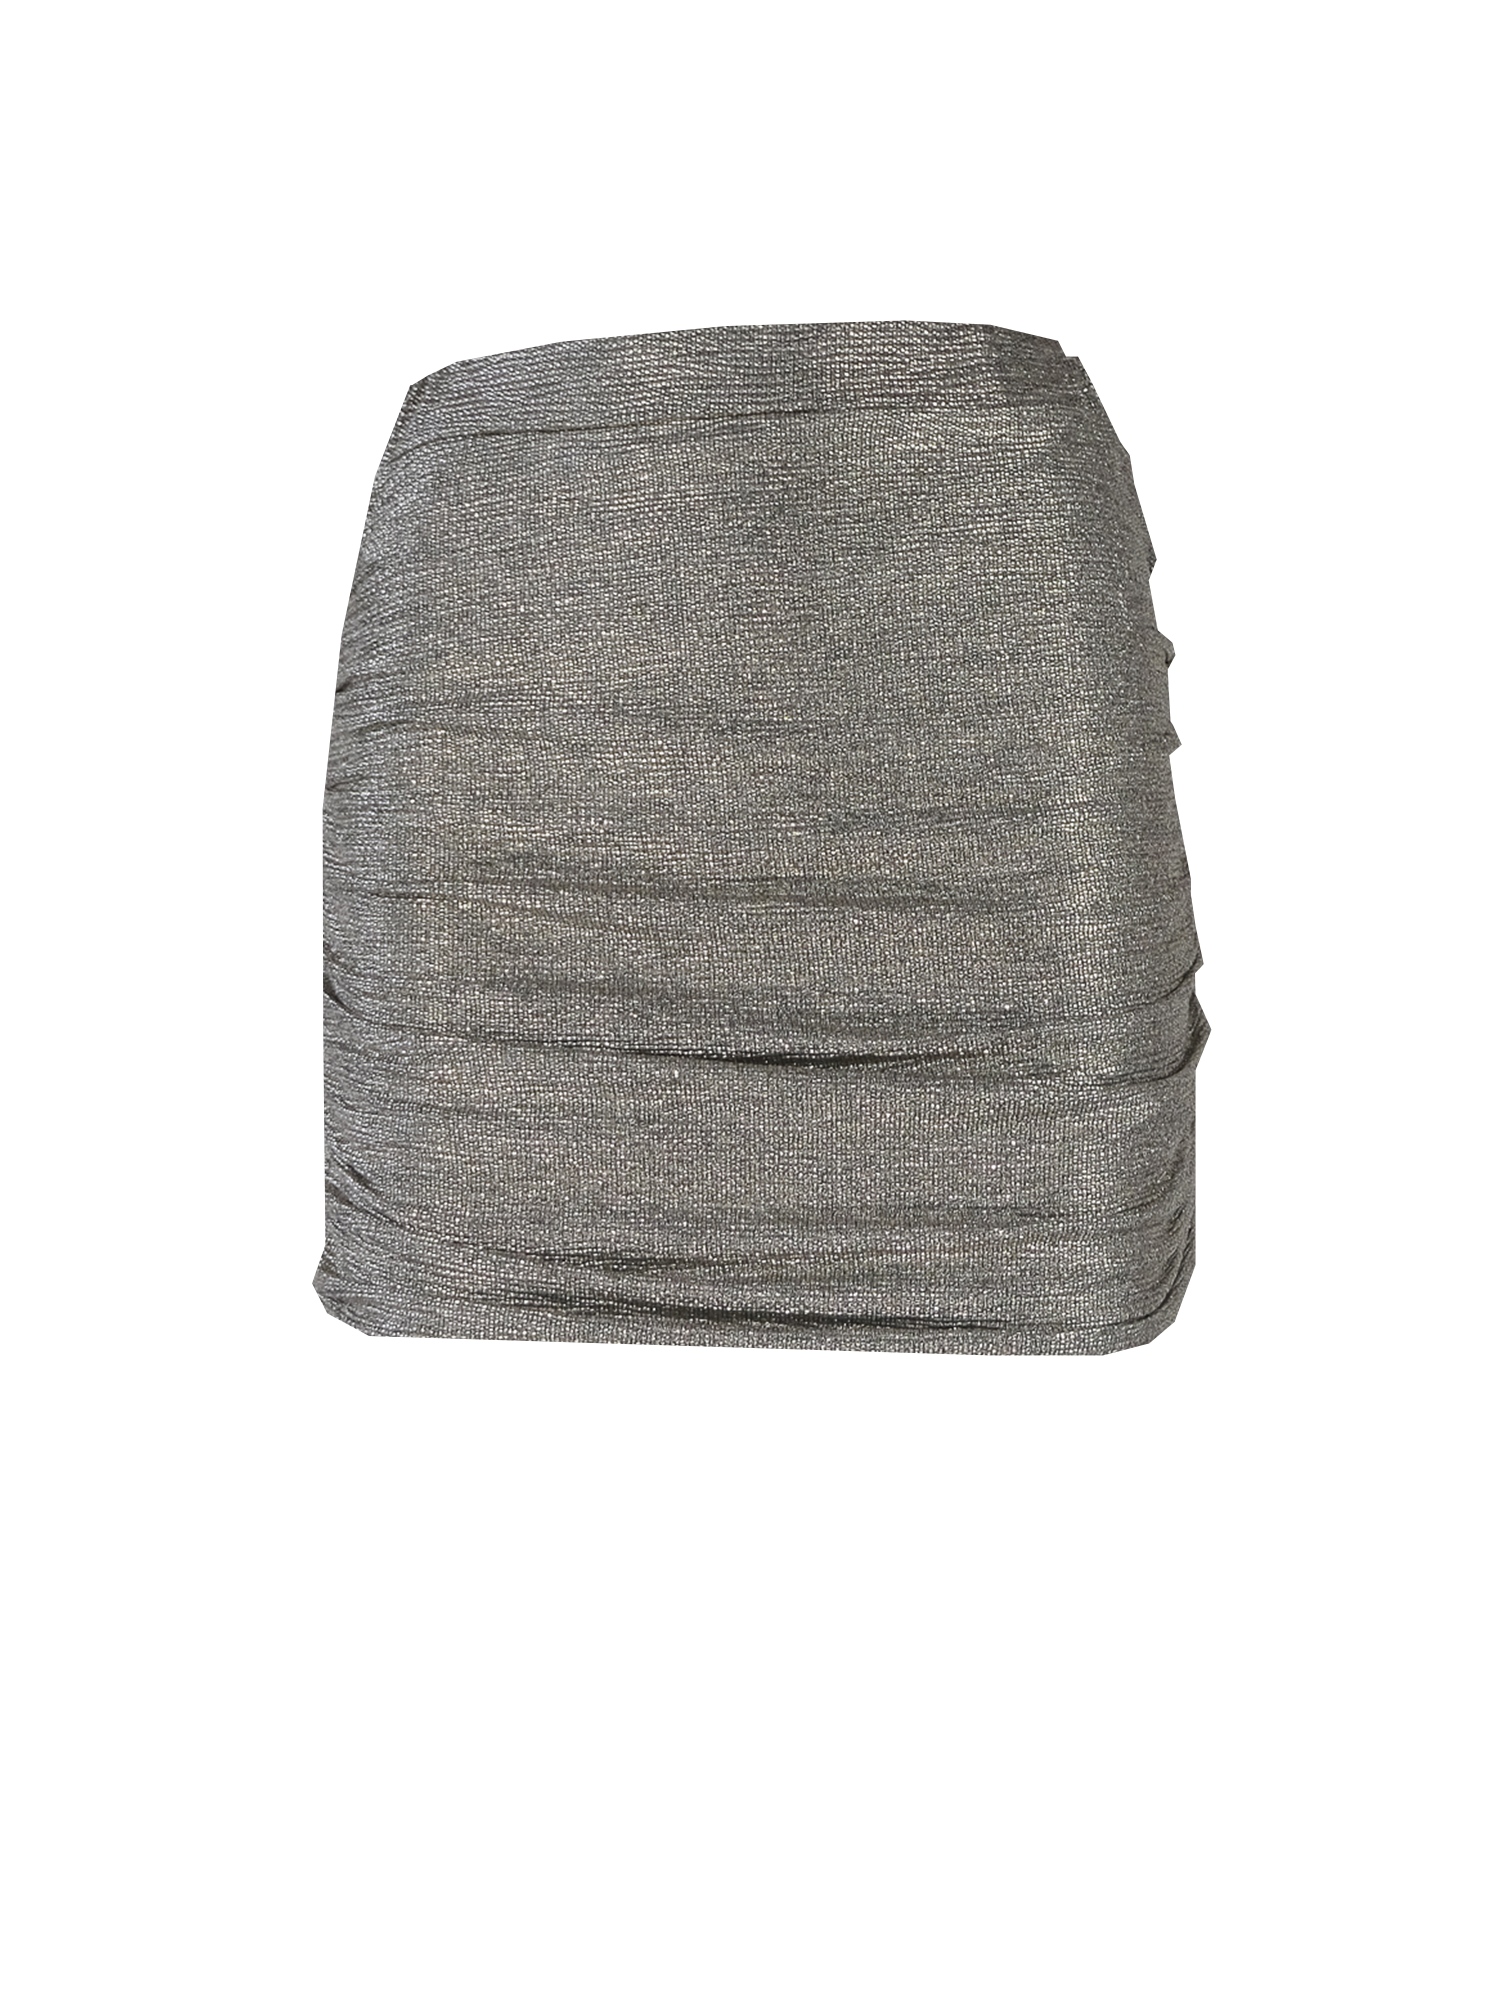 NINA - drap skirt in charcoal grey lurex